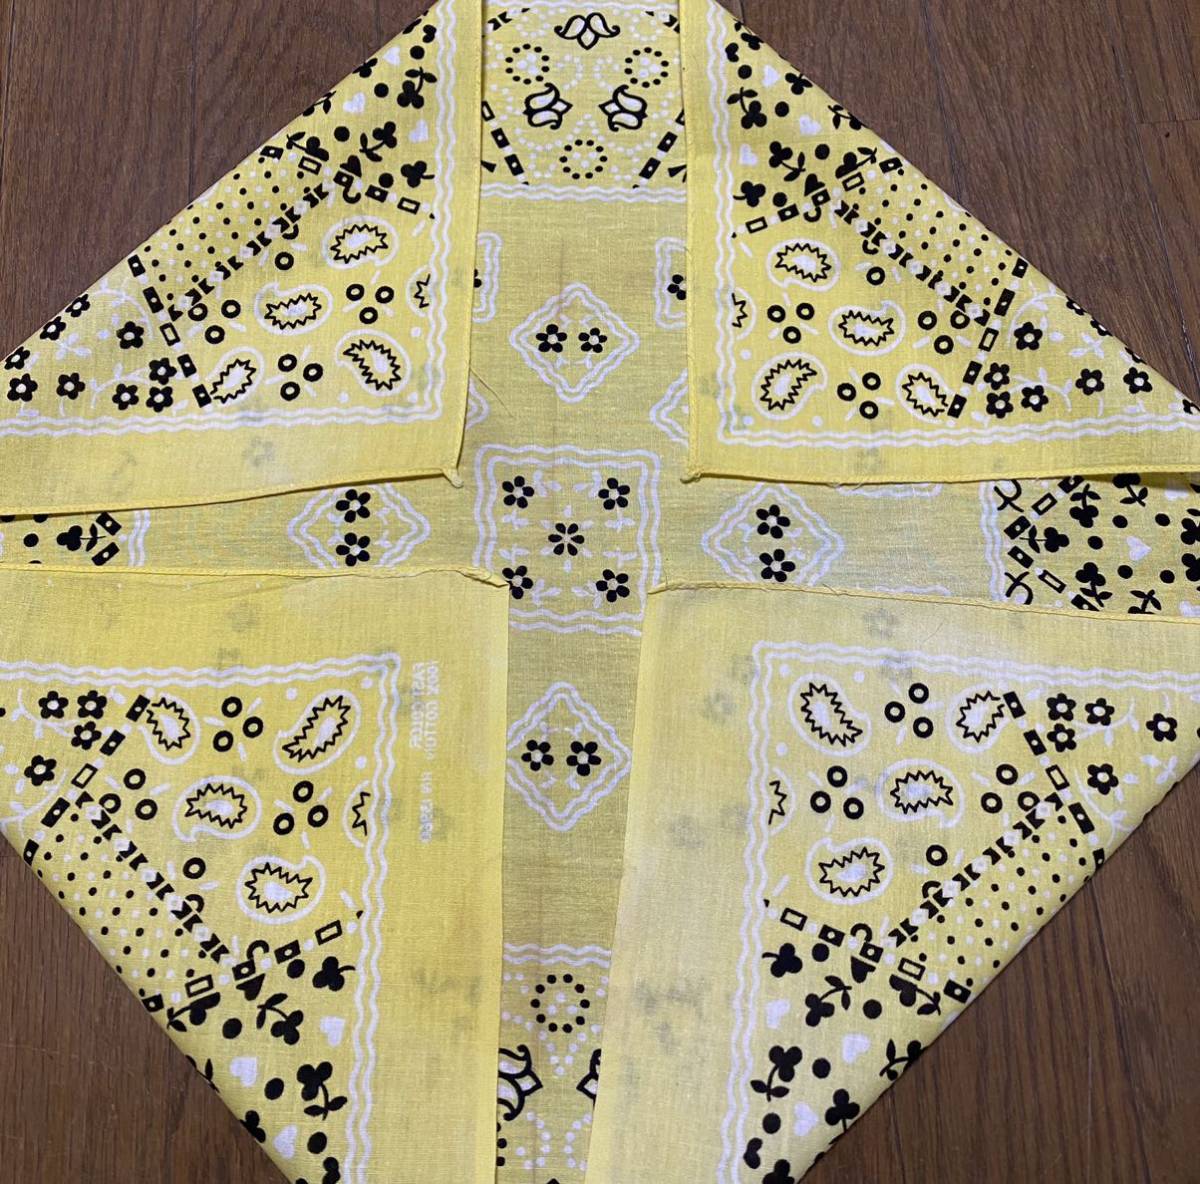  rare pattern cookie lemon yellow hard-to-find USA made vintage Vintage bandana 13960 A12135 / dot Tiger Elephant 